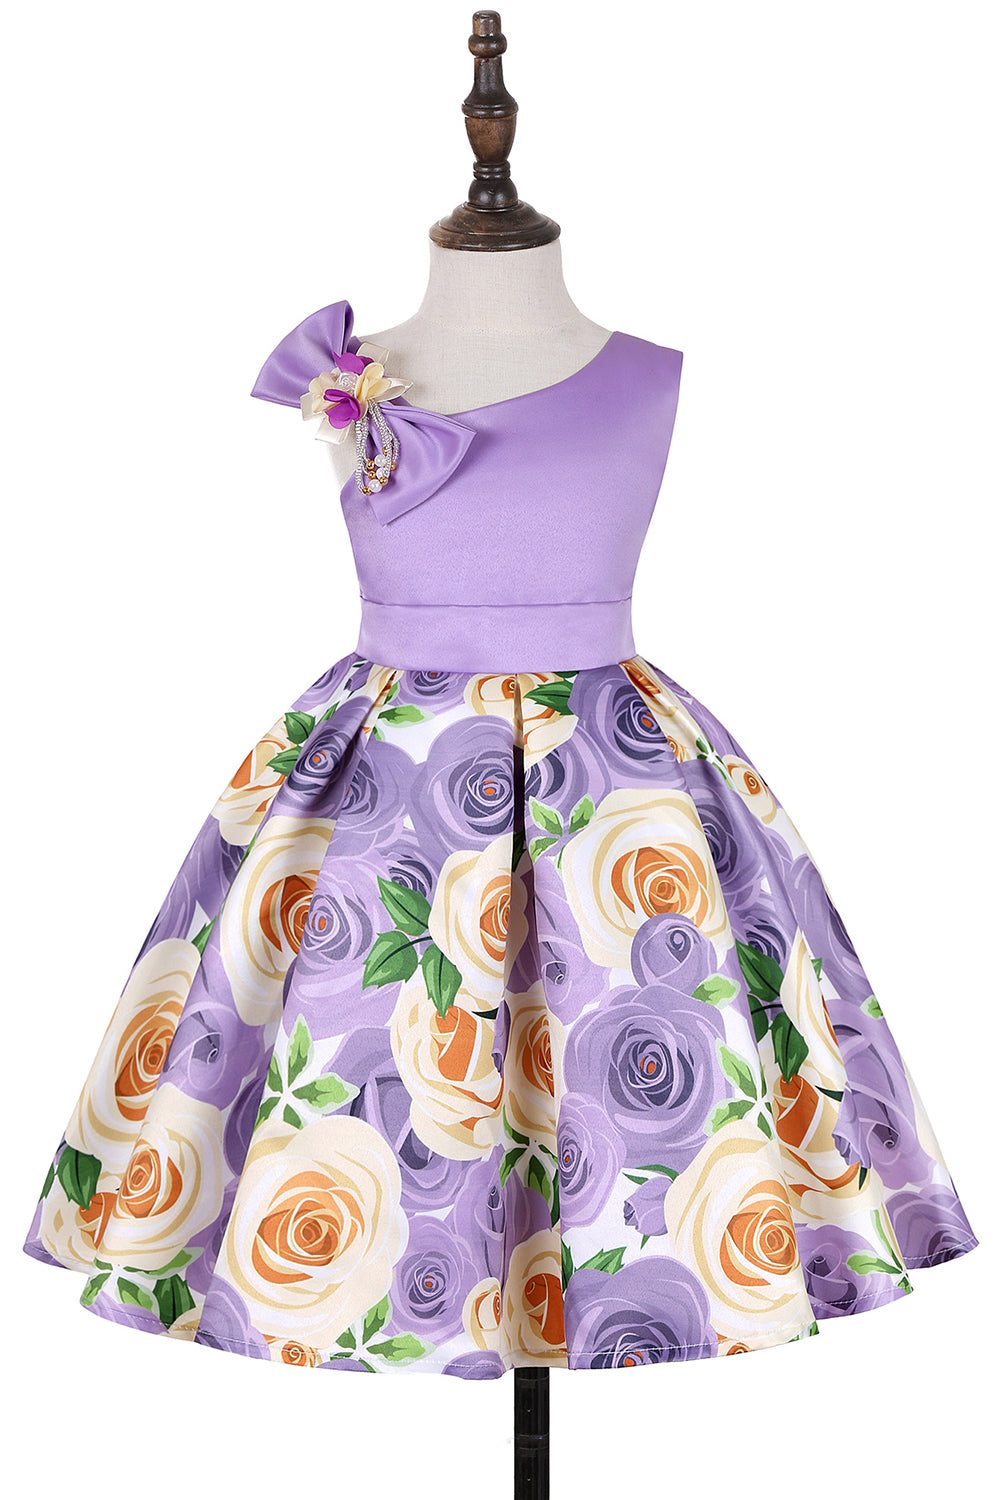 Floral Purple Sleeveless Girls' Party Dress